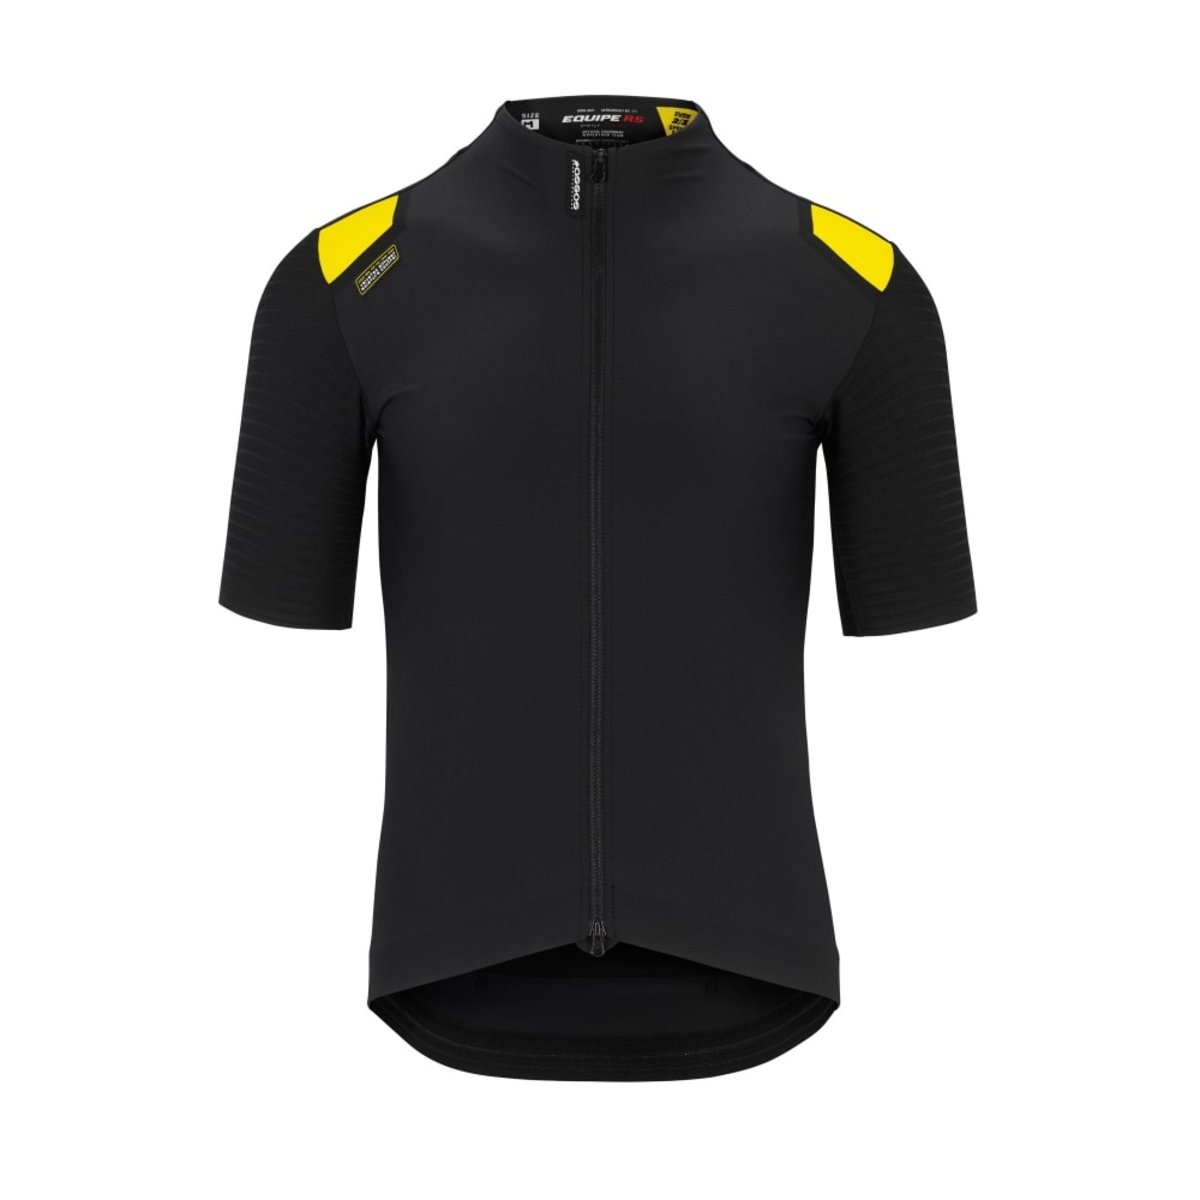 Джерси ASSOS Equipe RS Spring Fall Aero SS Jersey Black Series, кор. рукав, мужское, черное с желтым, XL